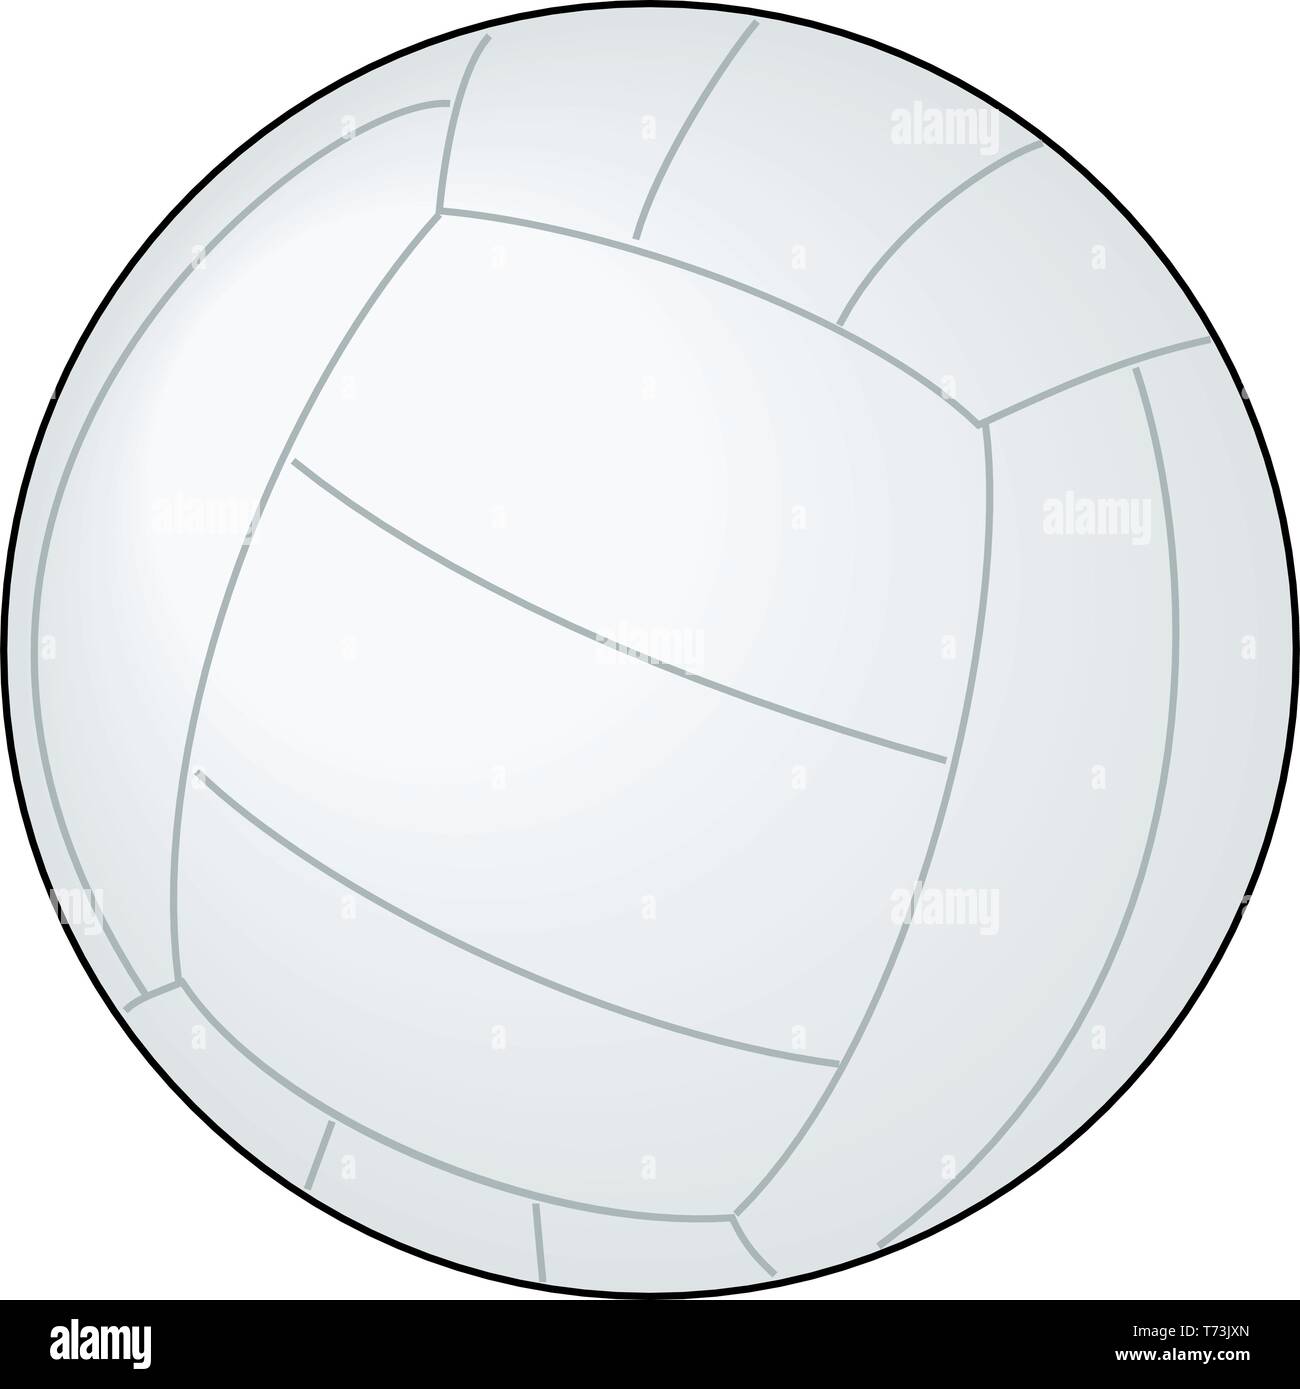 Volleyball Vector Illustration Stock Vector Image & Art - Alamy